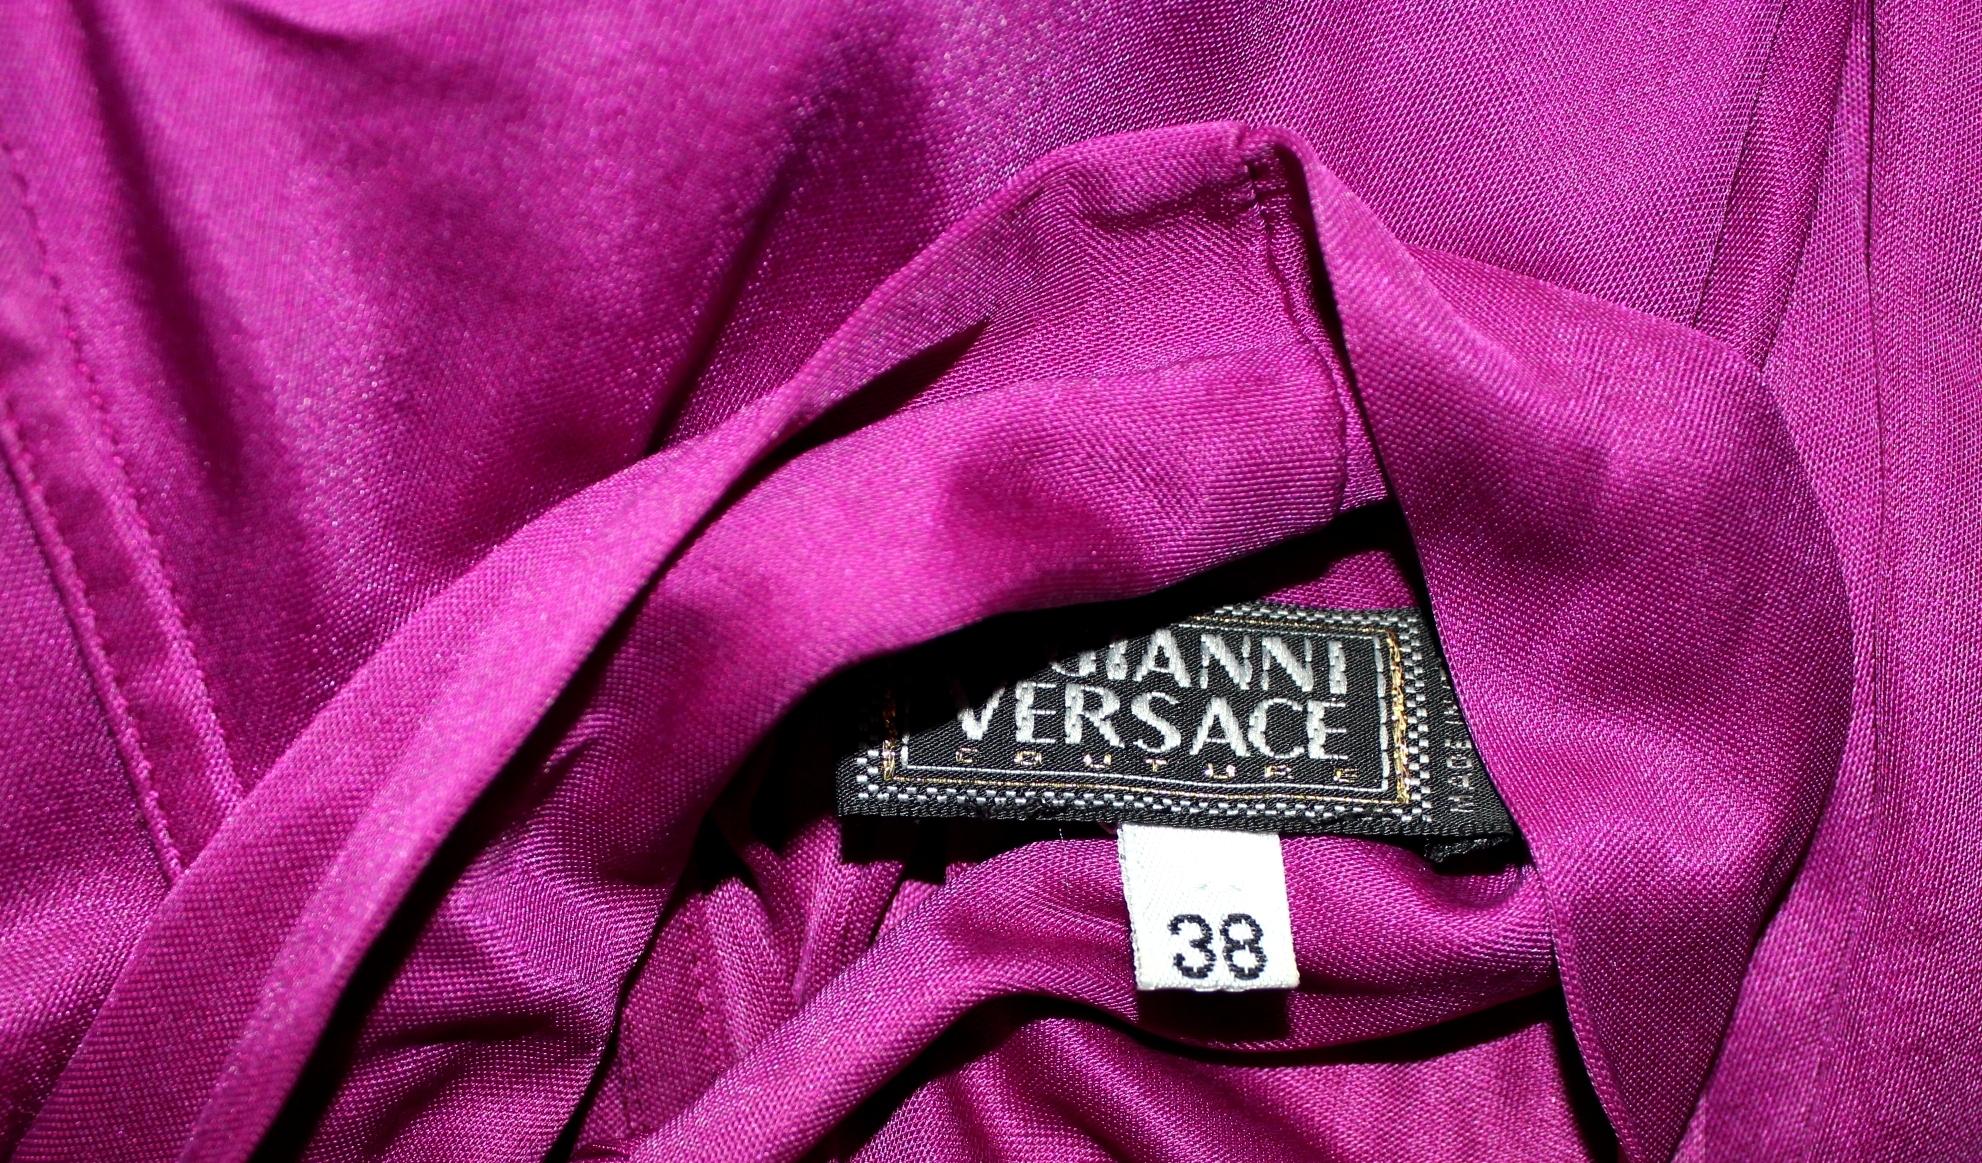 Gianni Versace SS 2000 Jungle Purple Hot Silk Blouse Top Swarovski Buttons 38 For Sale 1